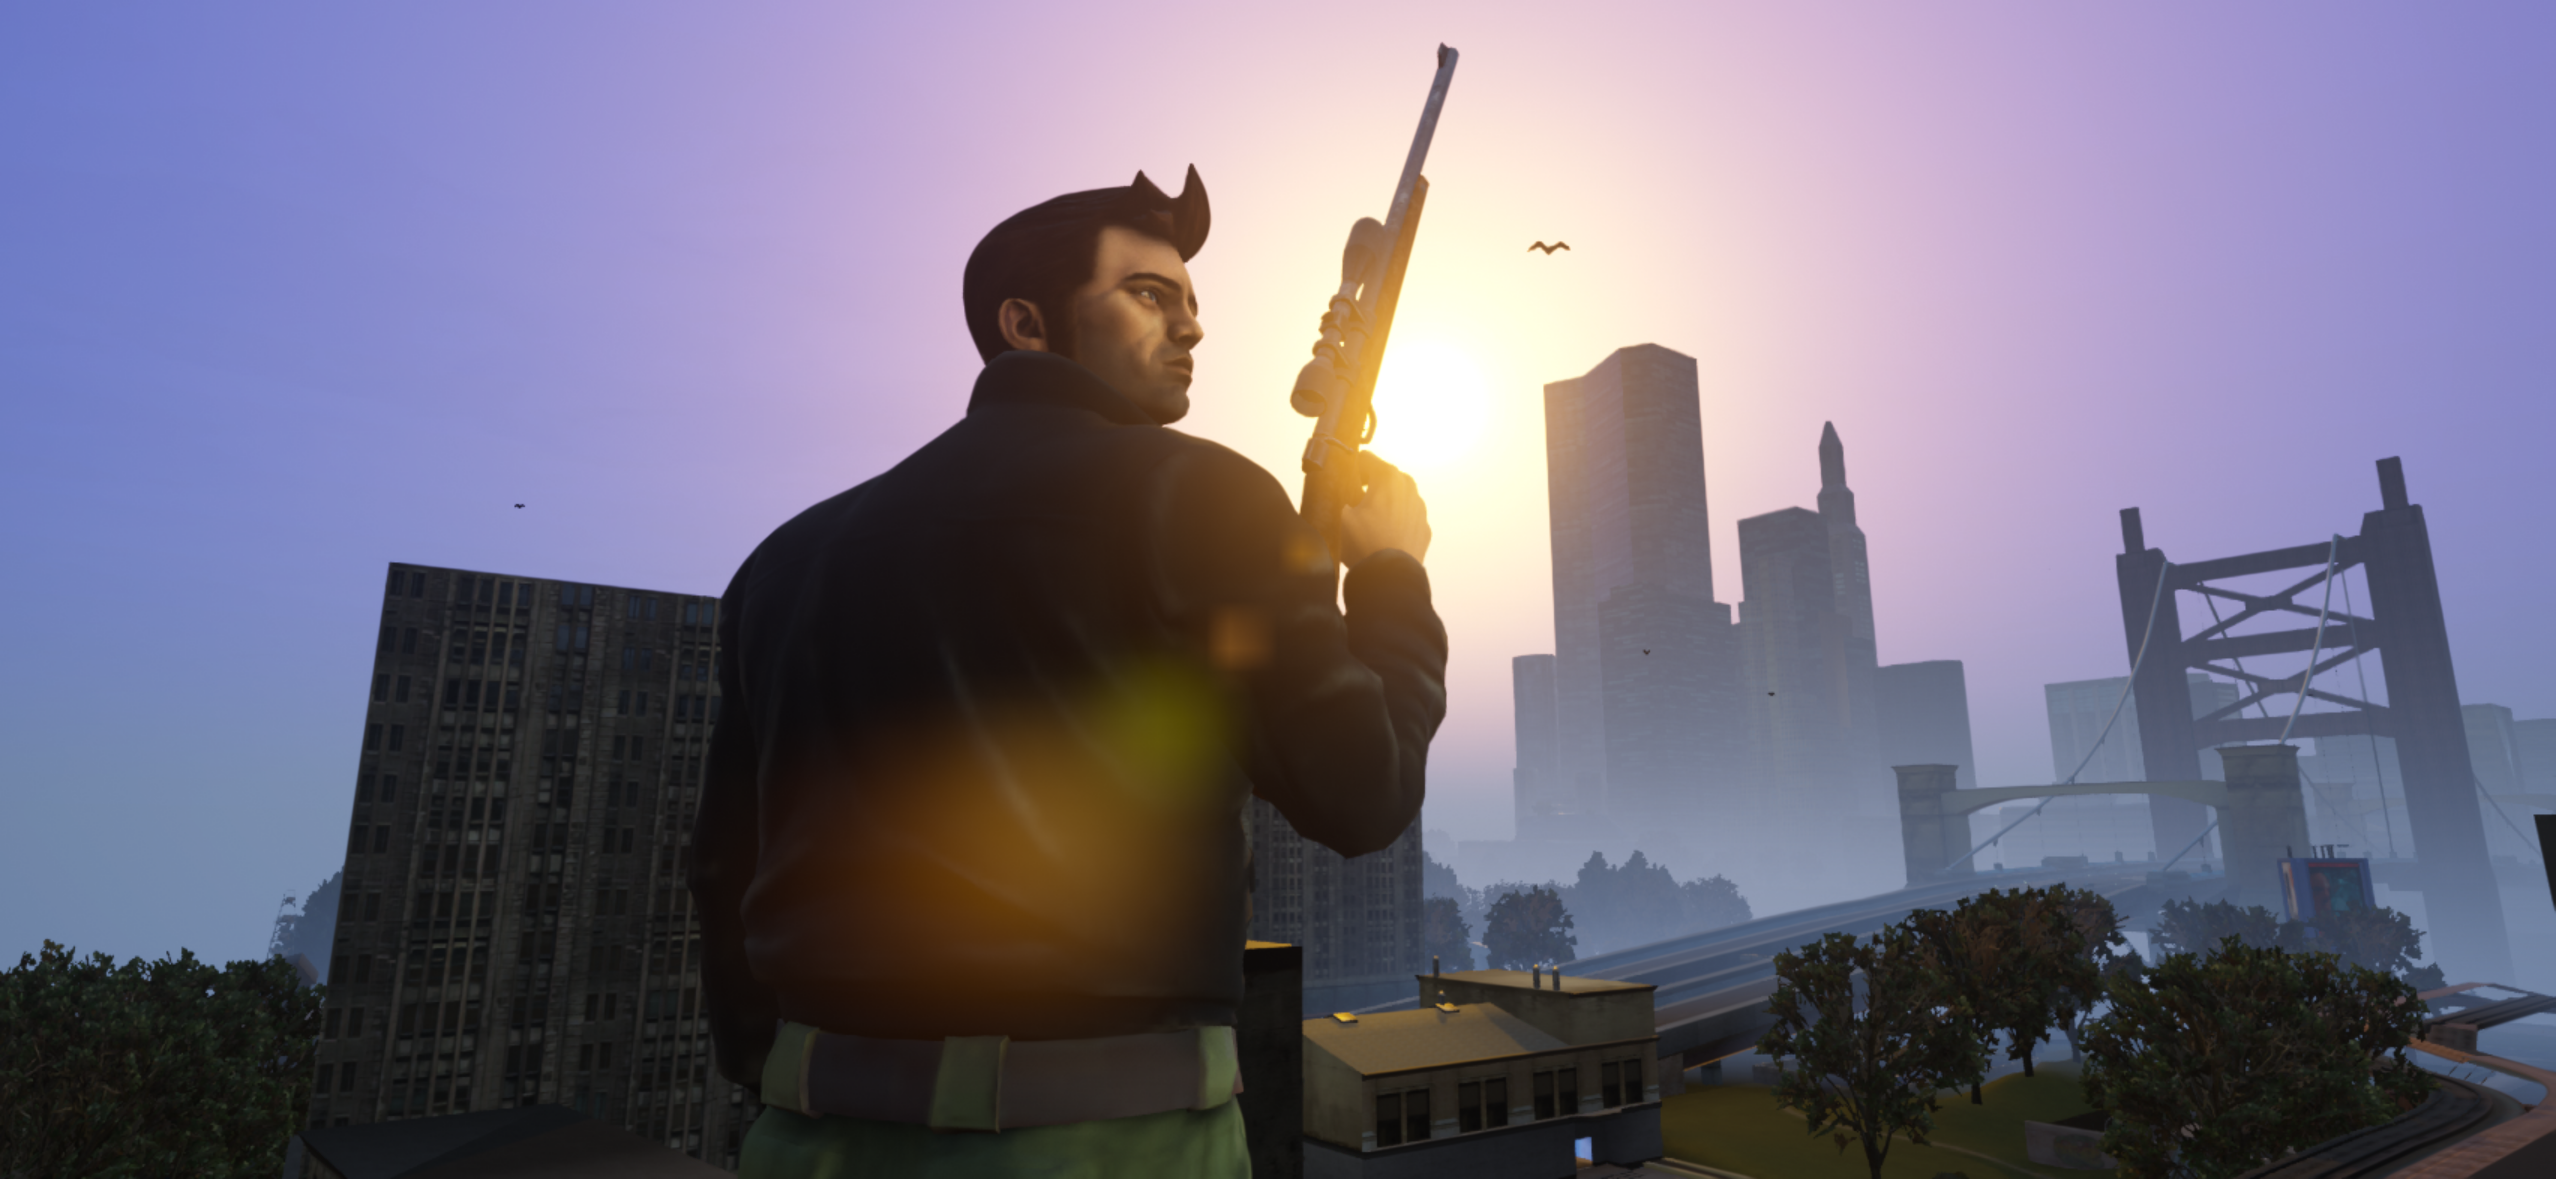 GTA III - Definitive screenshot game